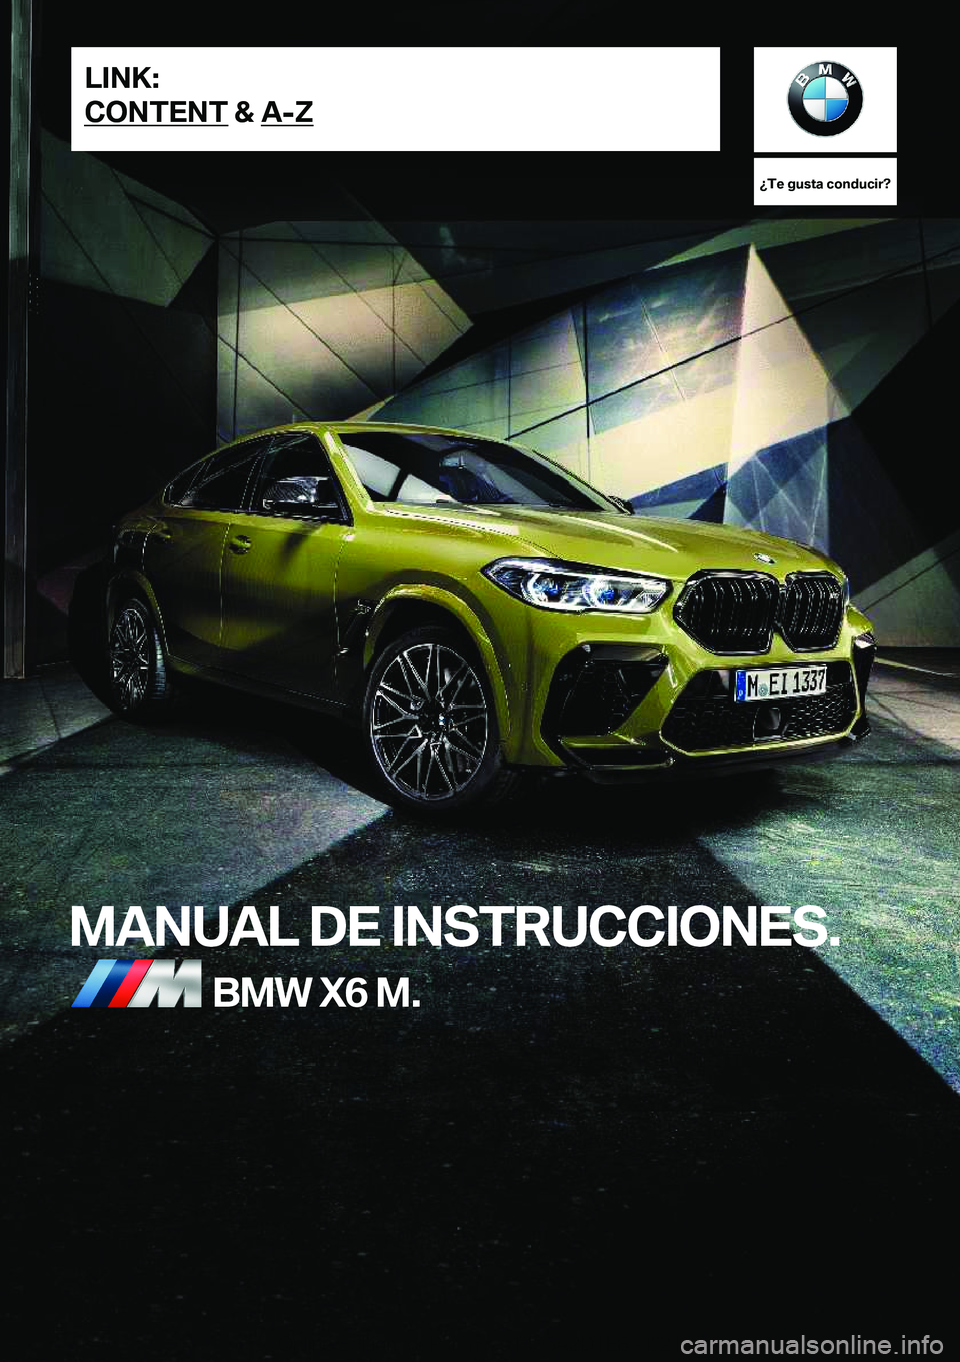 BMW X6 M 2021  Manuales de Empleo (in Spanish) ��T�e��g�u�s�t�a��c�o�n�d�u�c�i�r� 
�M�A�N�U�A�L��D�E��I�N�S�T�R�U�C�C�I�O�N�E�S�.�B�M�W��X�6��M�.�L�I�N�K�:
�C�O�N�T�E�N�T��&��A�-�Z�O�n�l�i�n�e��E�d�i�t�i�o�n��f�o�r��P�a�r�t��n�o�.��0